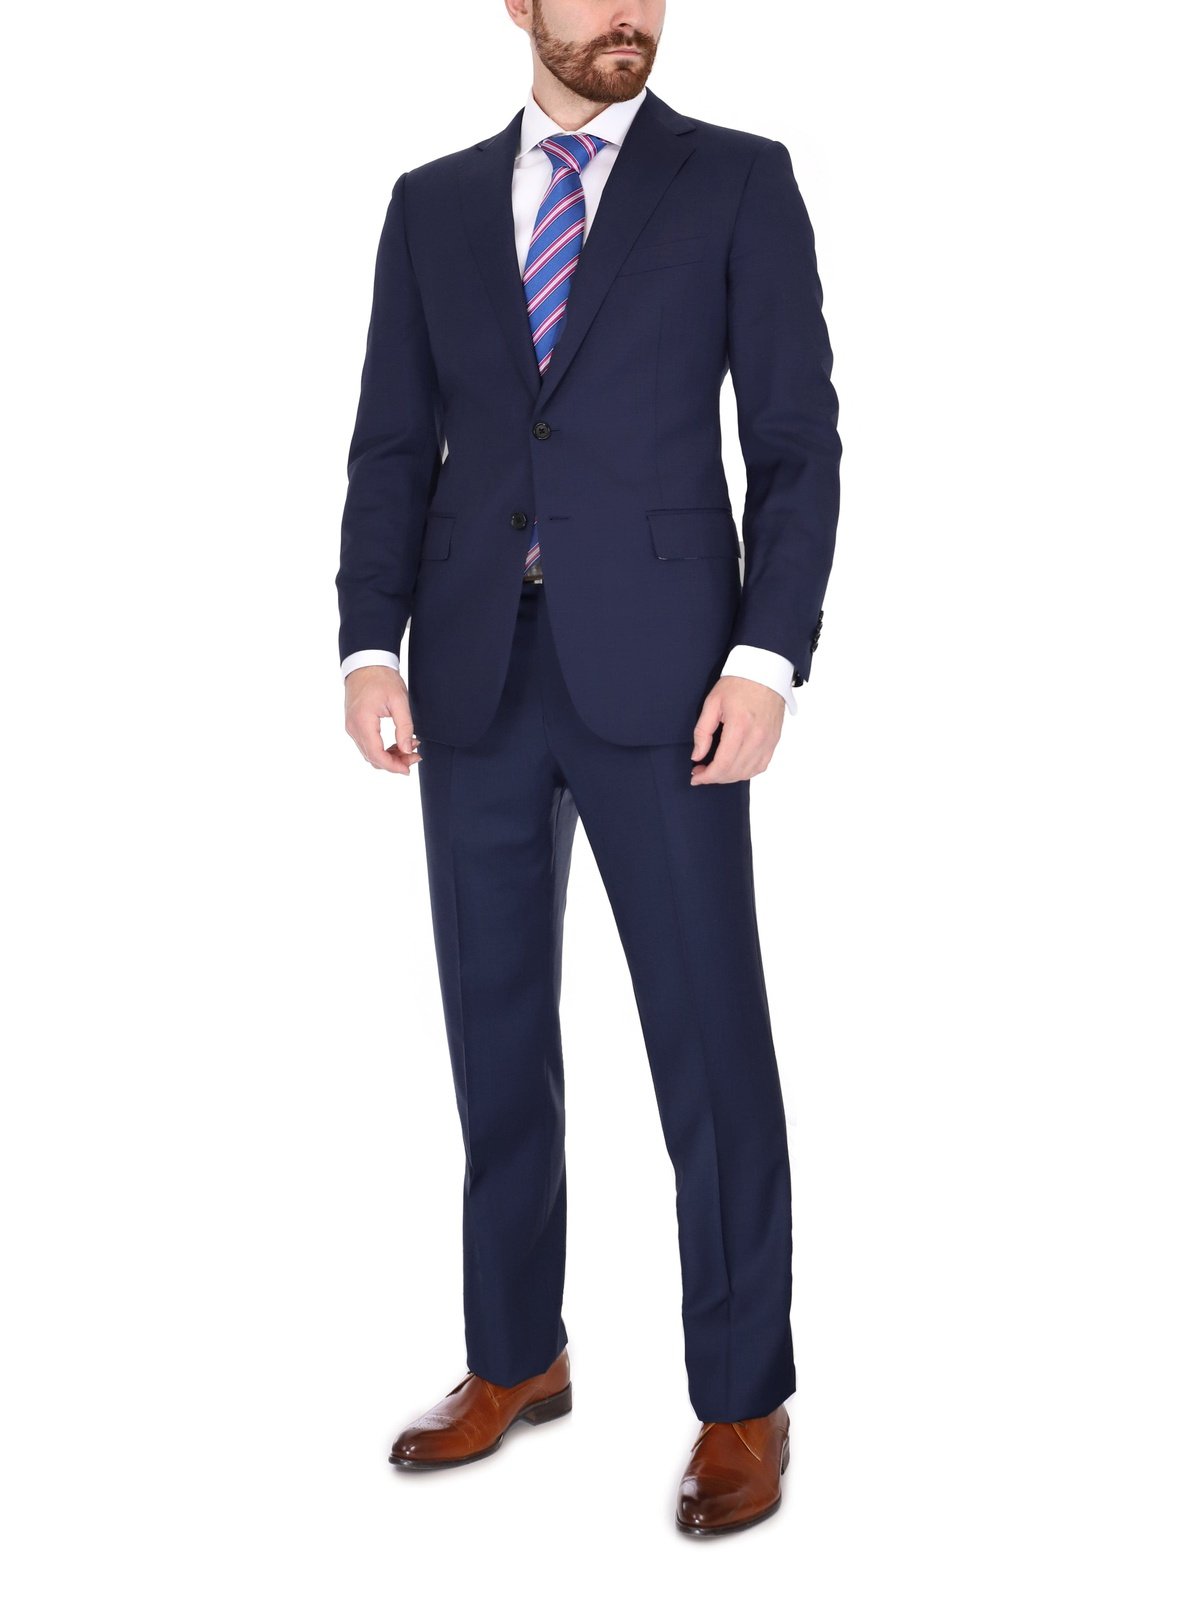 Blujacket SUITS Blujacket Men's Solid Navy Blue 100% Wool Canvassed Slim Fit Suit